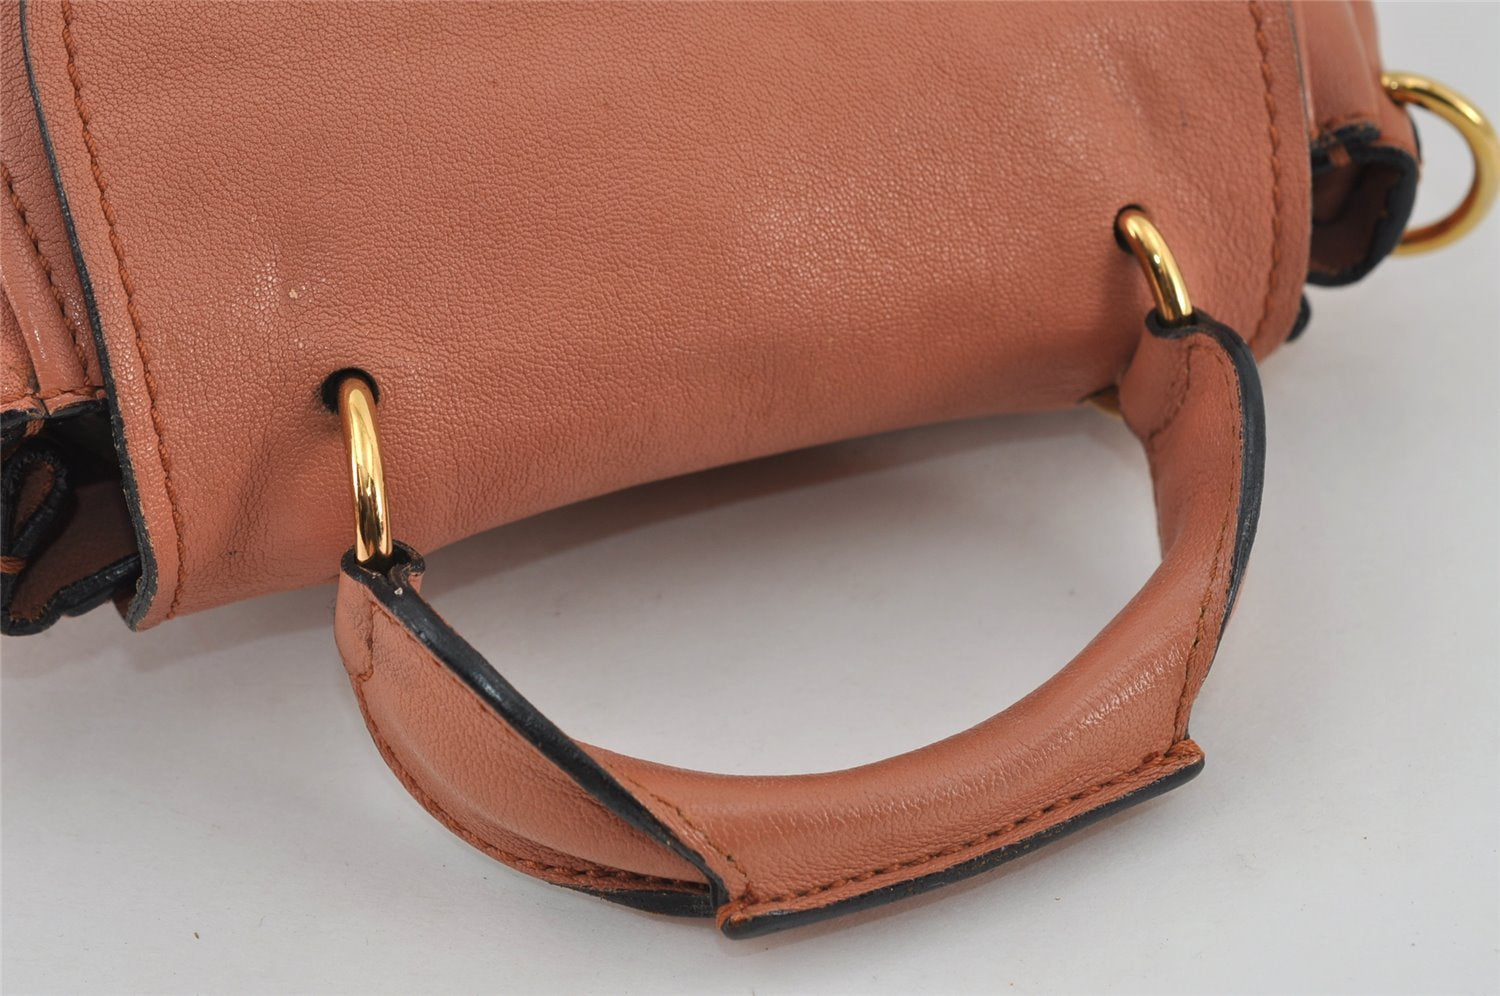 Authentic Chloe Elsie Vintage 2Way Hand Bag Purse Leather Pink 2451I